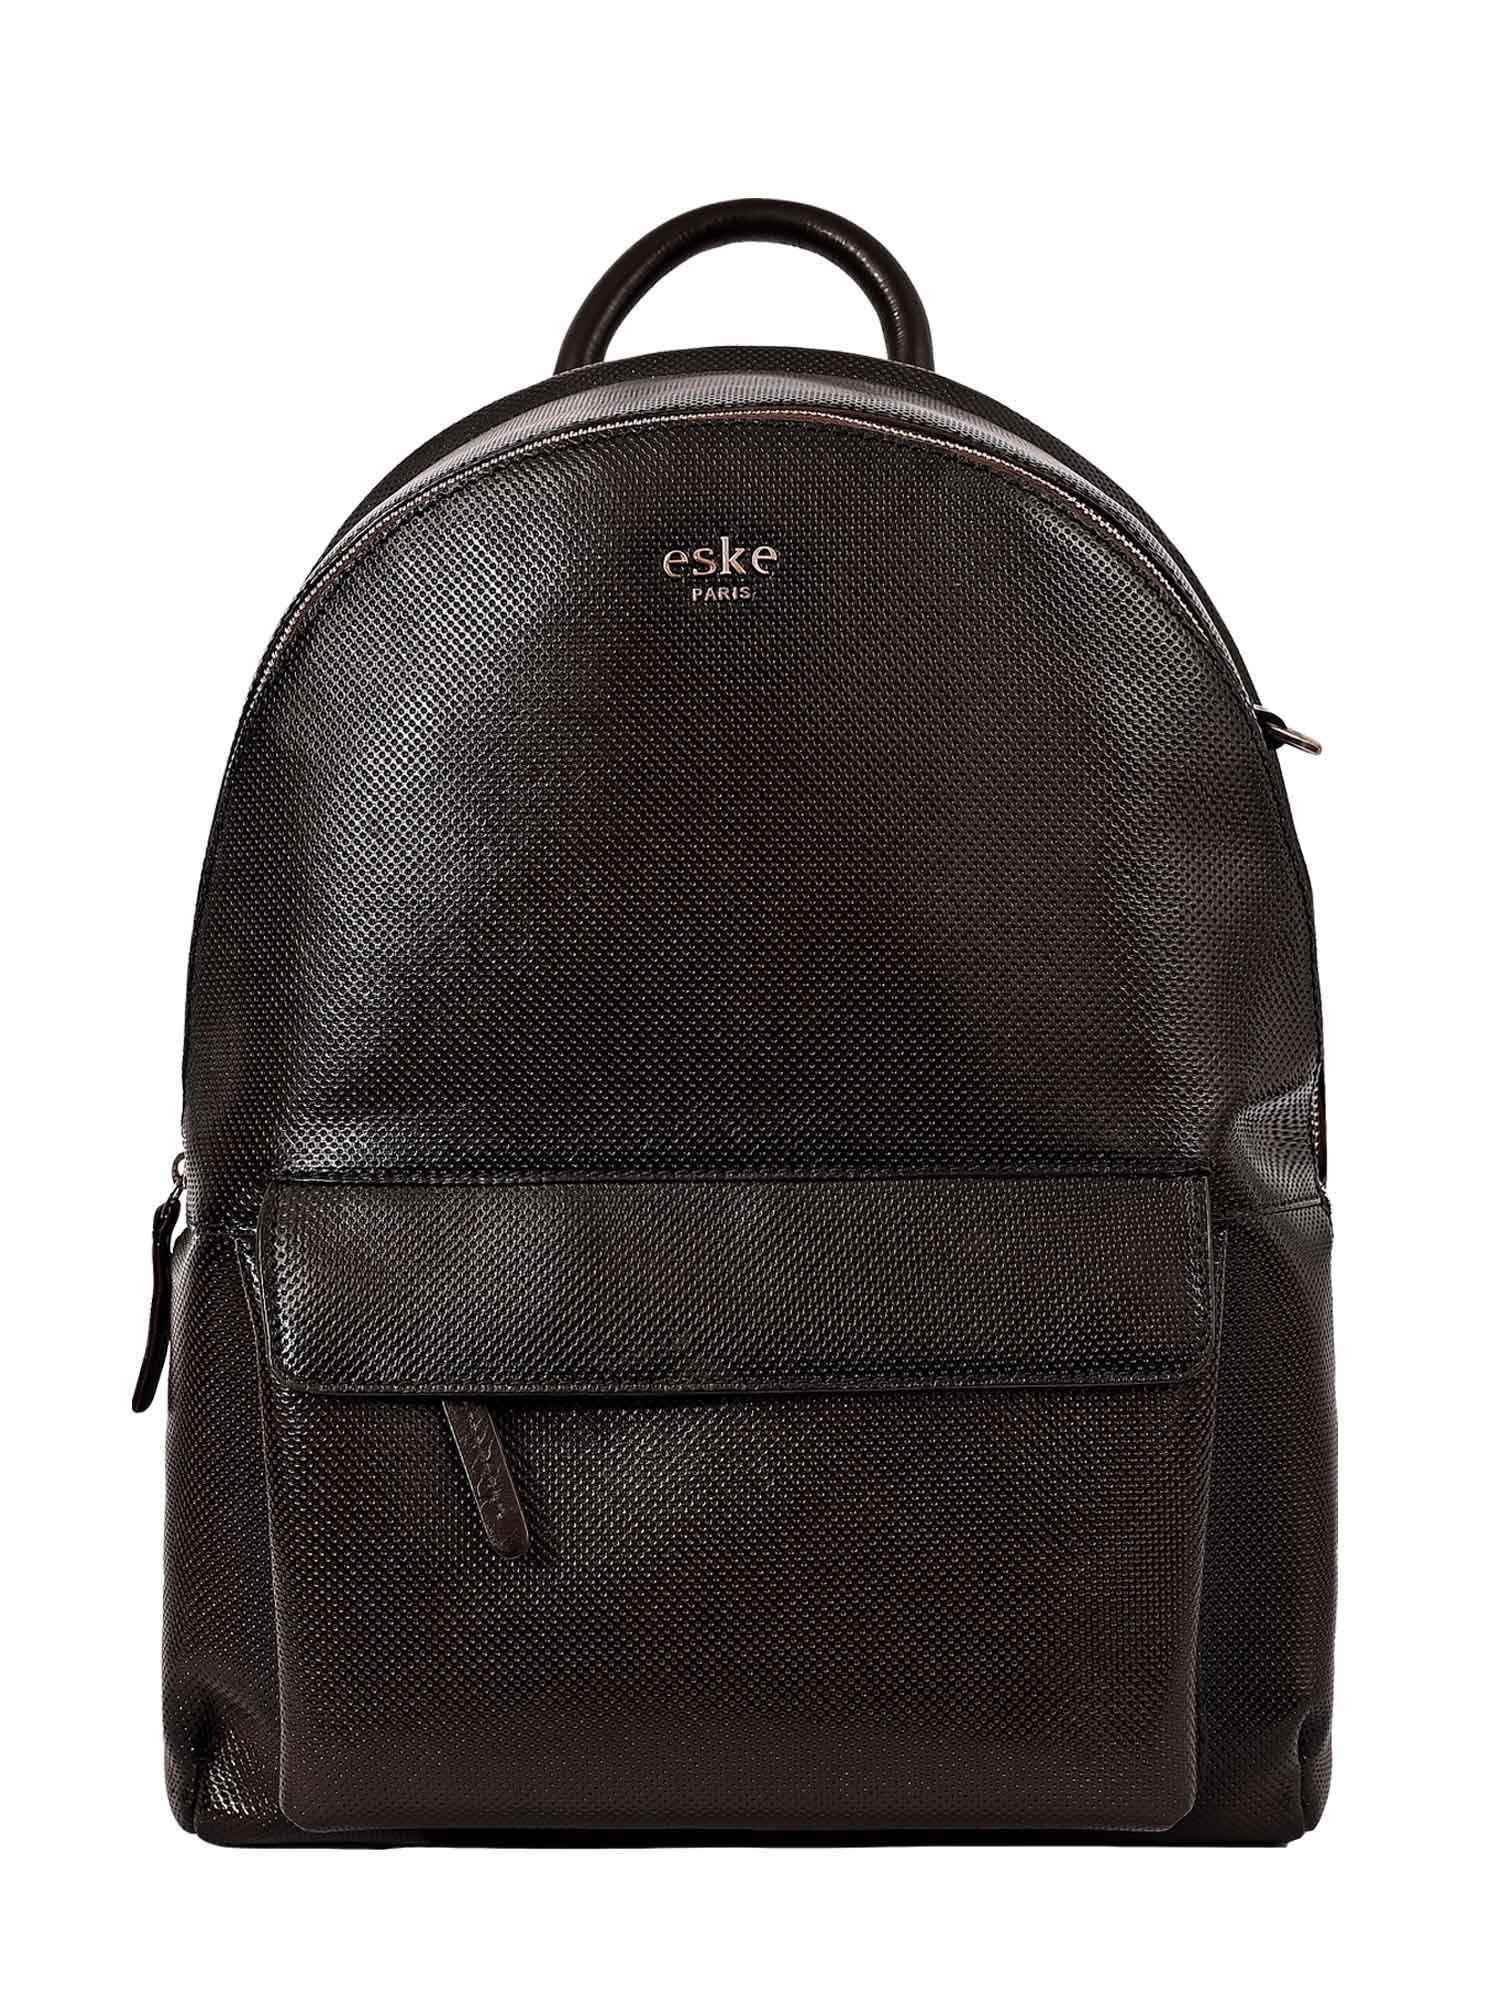 brown thomas genuine leather backpack